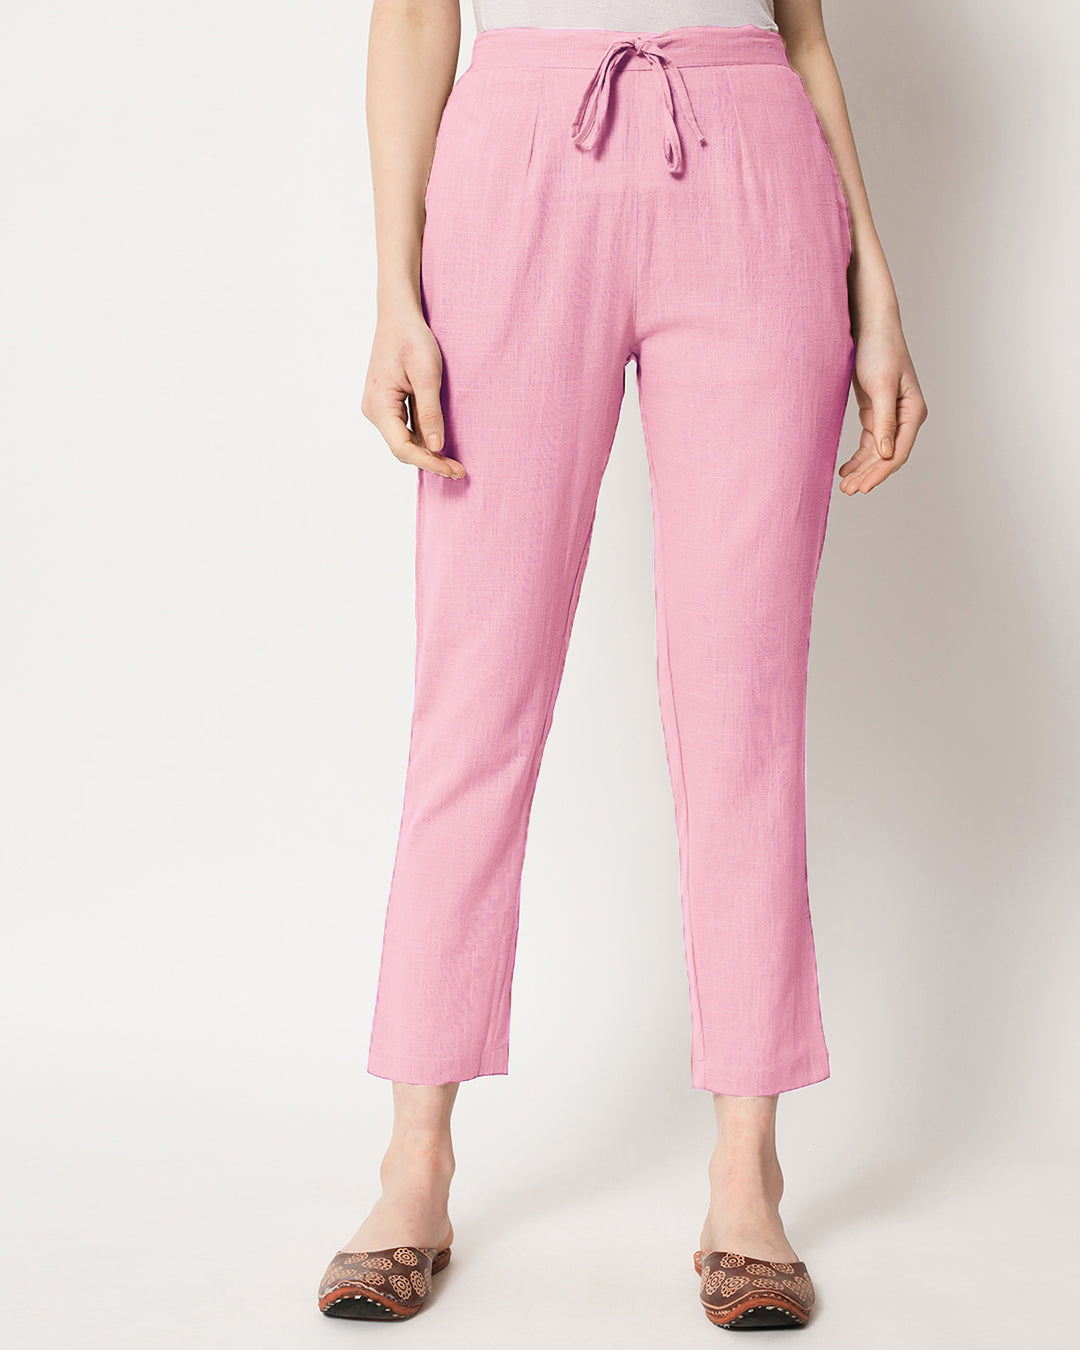 Combo: Beige & Pink Mist Cigarette Pants- Set of 2